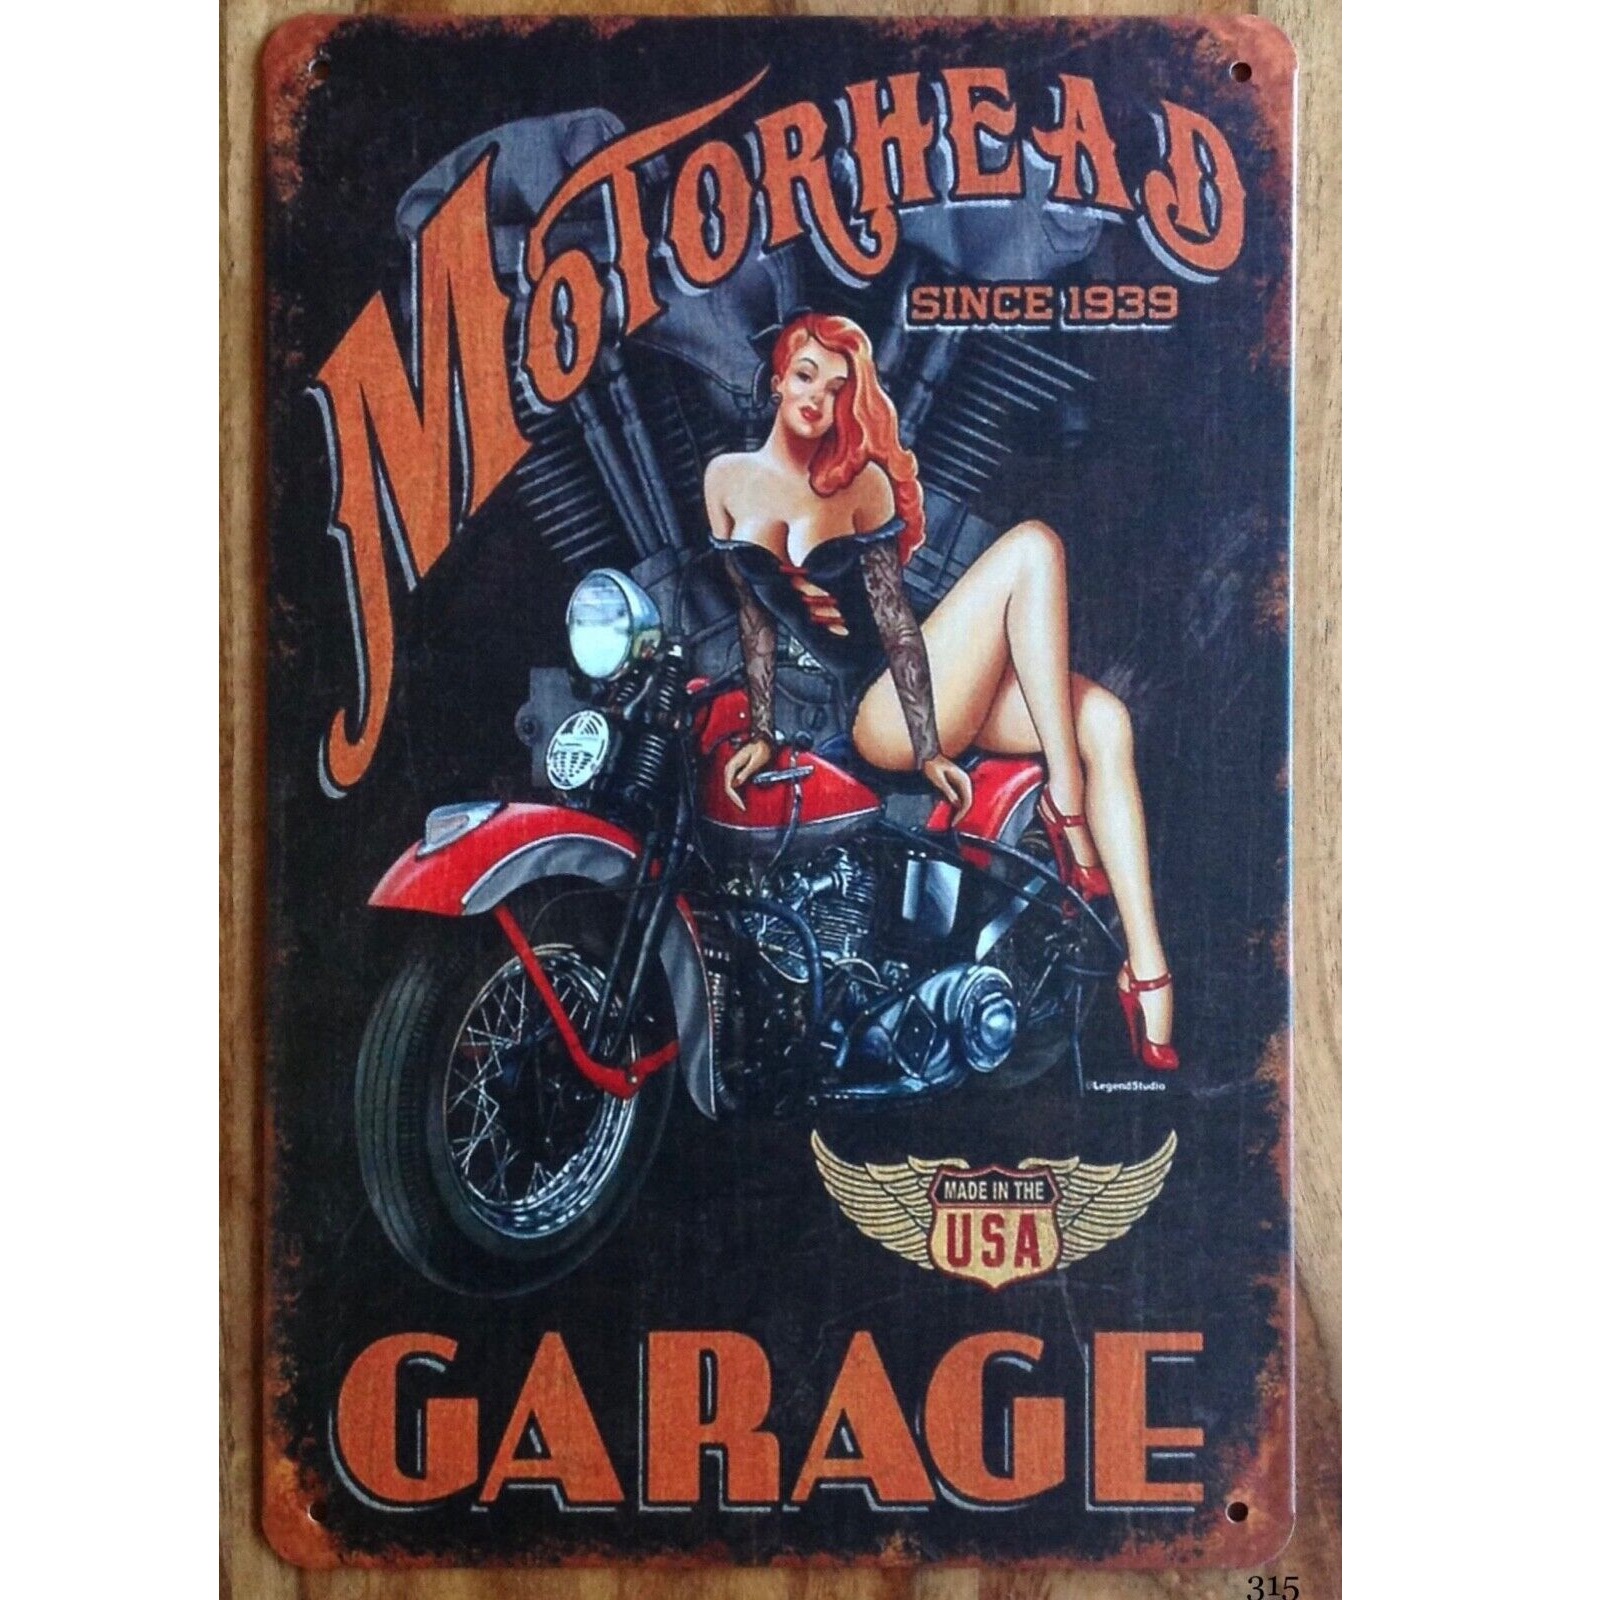 Motorhead Garage Thermometer 